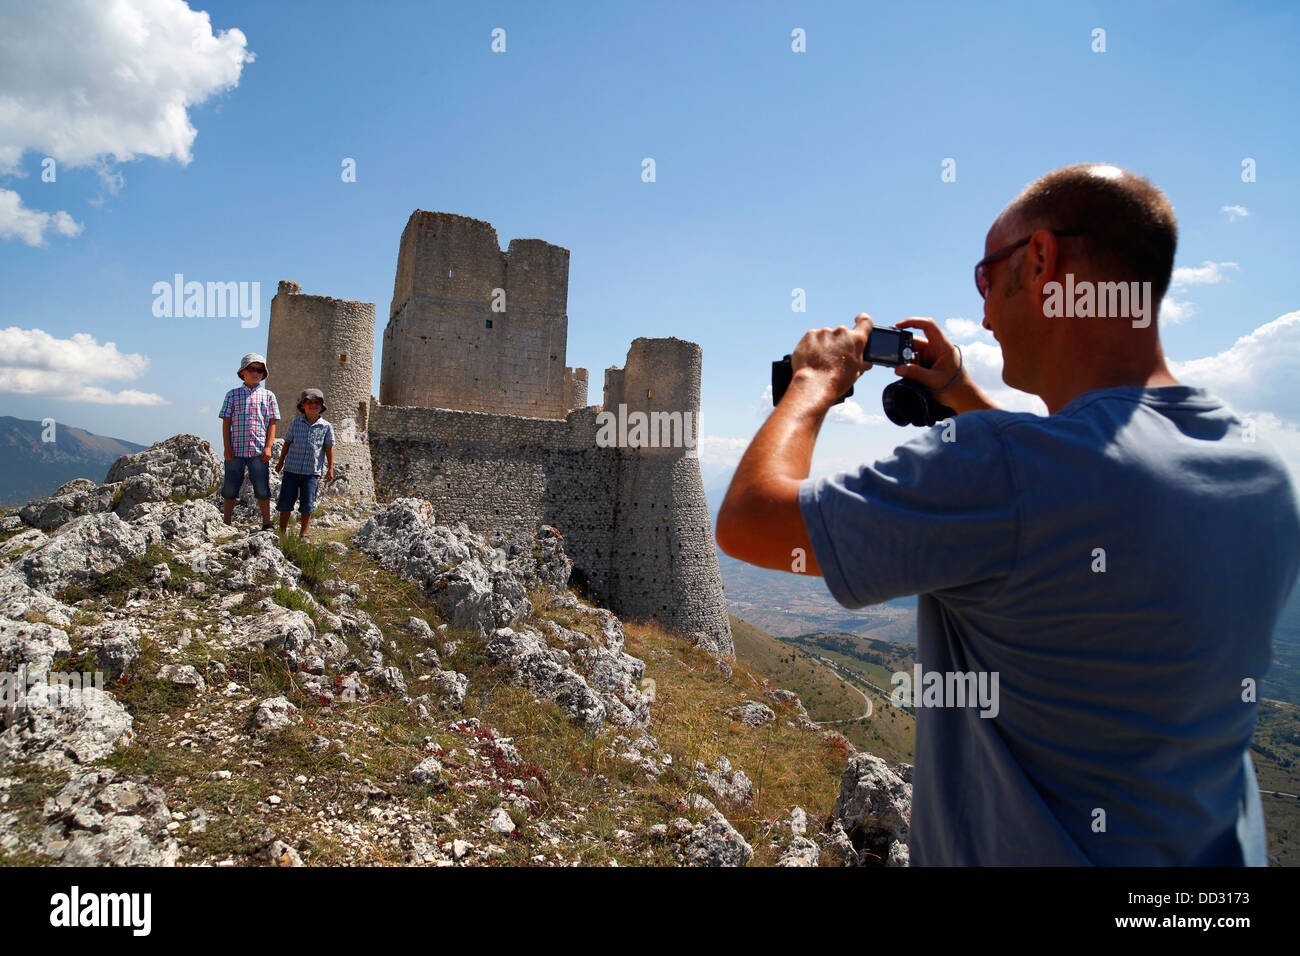 A tourist photographs the medieval castle at Rocca Calascio in Abruzzo, Italy. Stock Photo